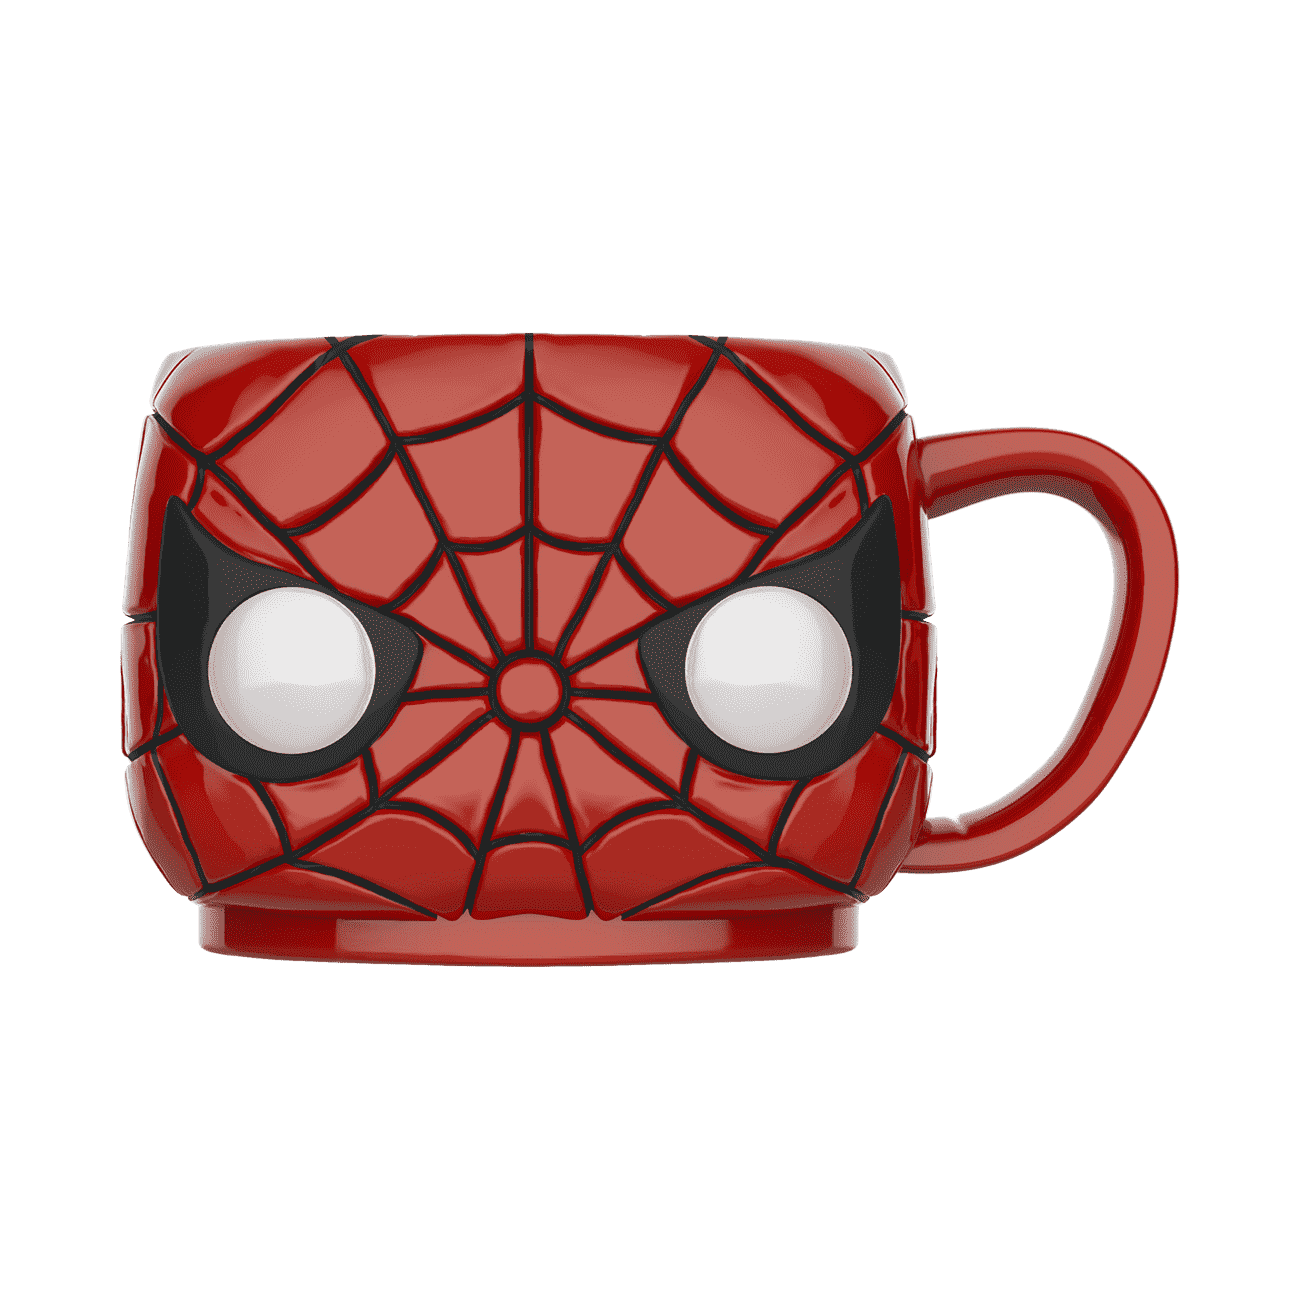 Buy Swastiksales Plastic mugs for kids - Spiderman Online at Low